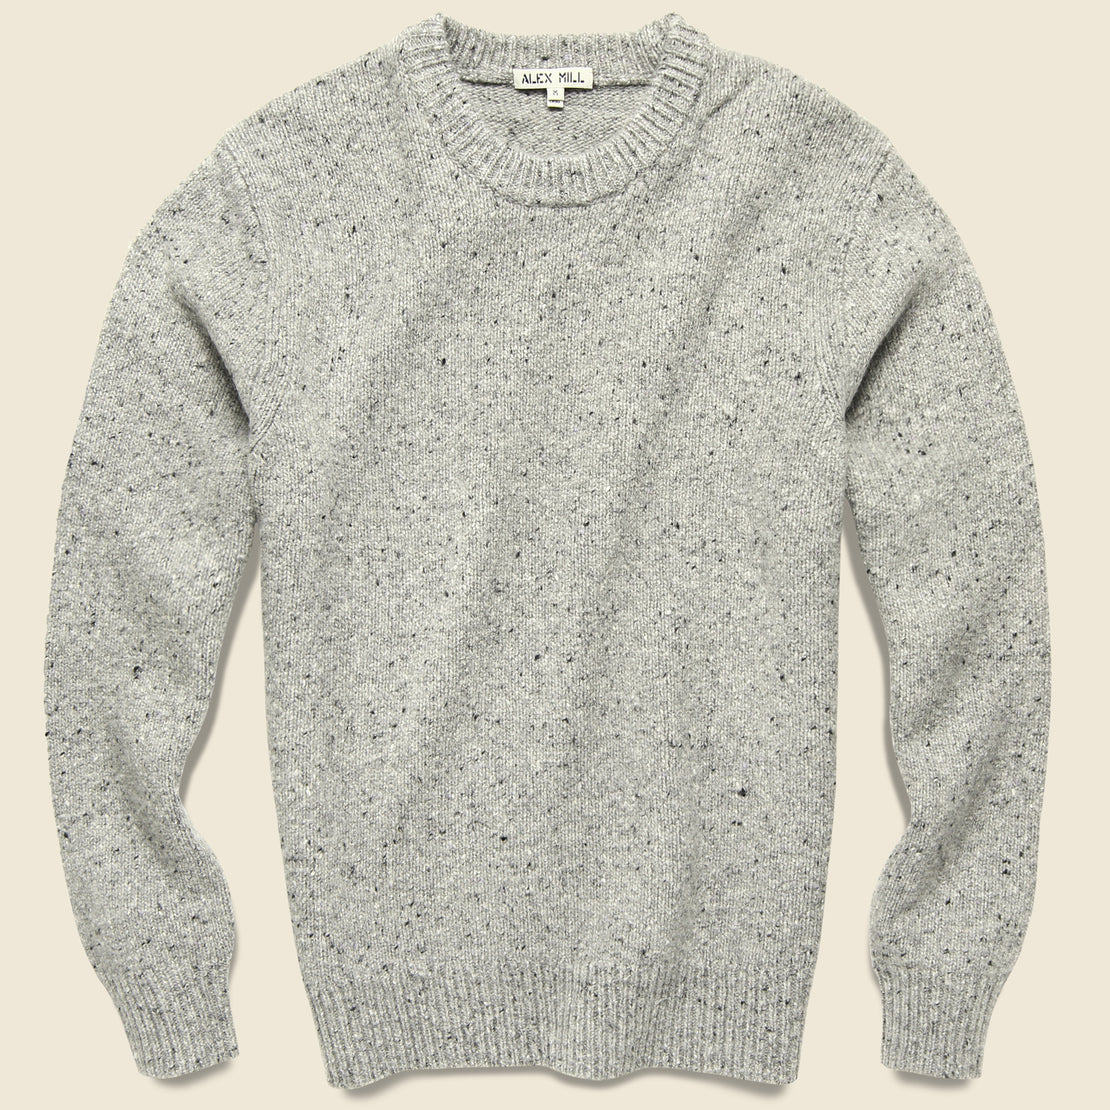 Alex Mill Donegal Crew Neck Sweater - Light Mist